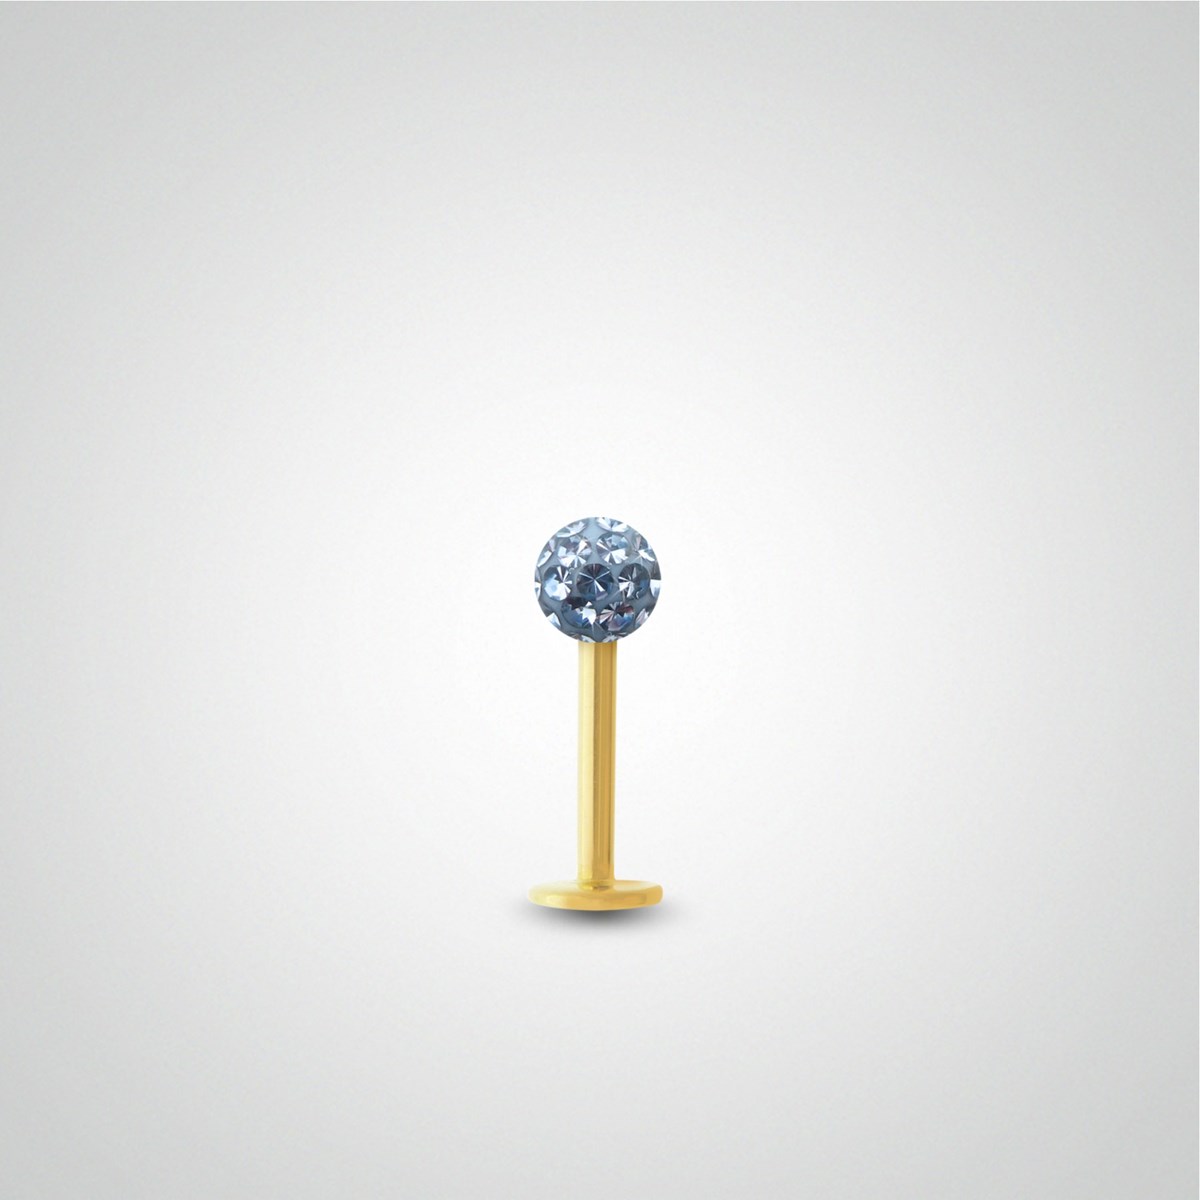 Piercing hélix barre or jaune avec boule en cristal de Swarovski bleu ciel